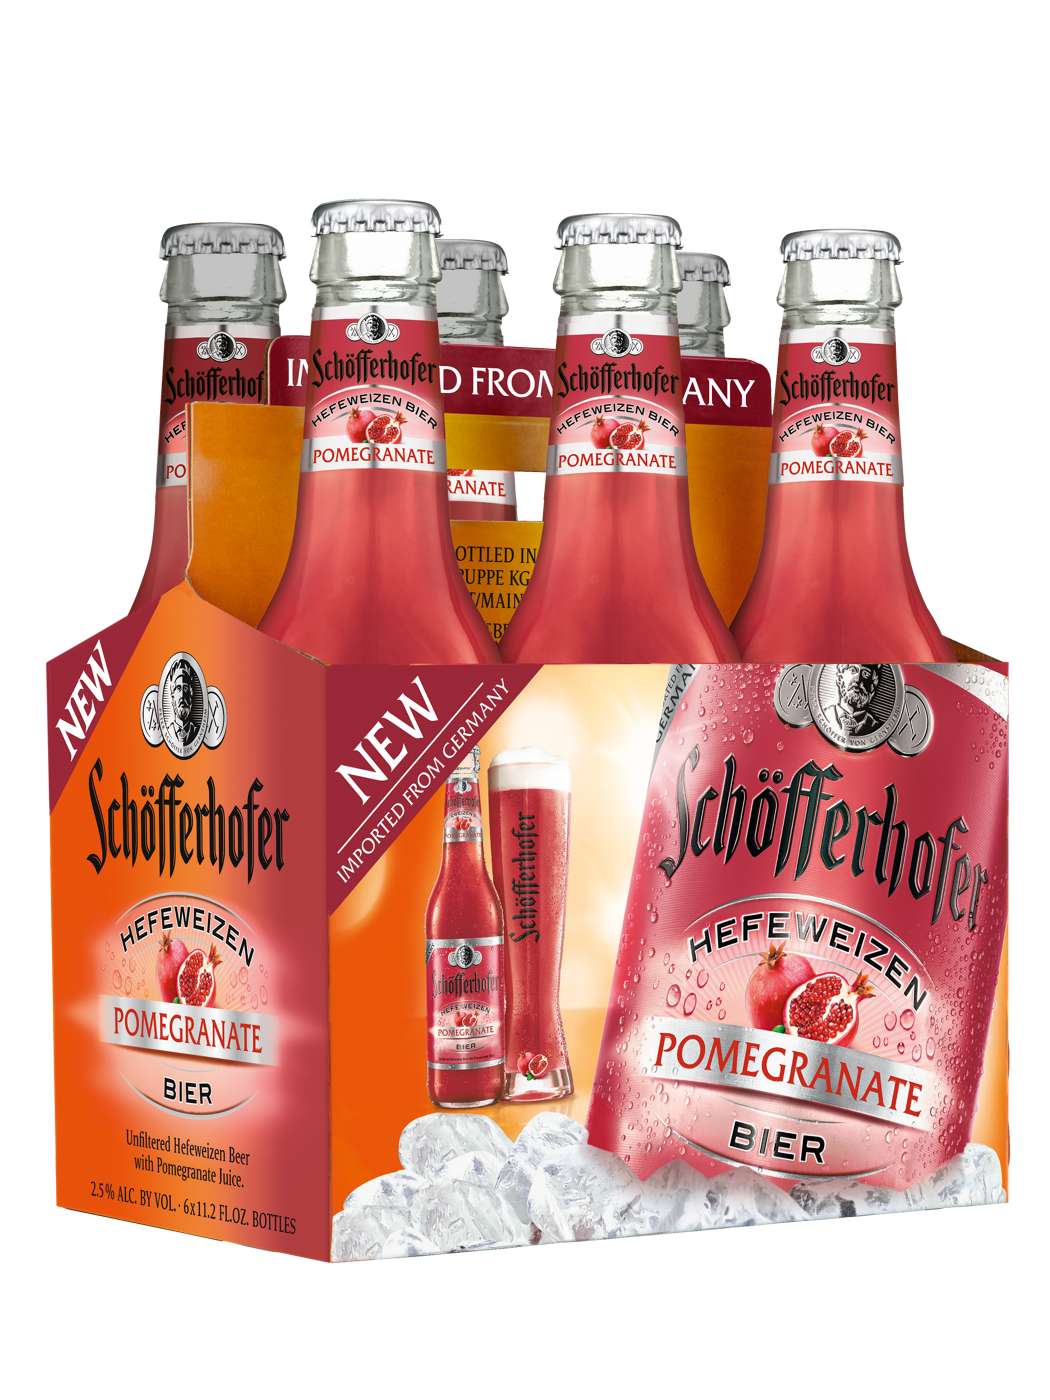 Schofferhofer Pomegranate Hefeweizen Beer 11.2 oz Bottles; image 3 of 3